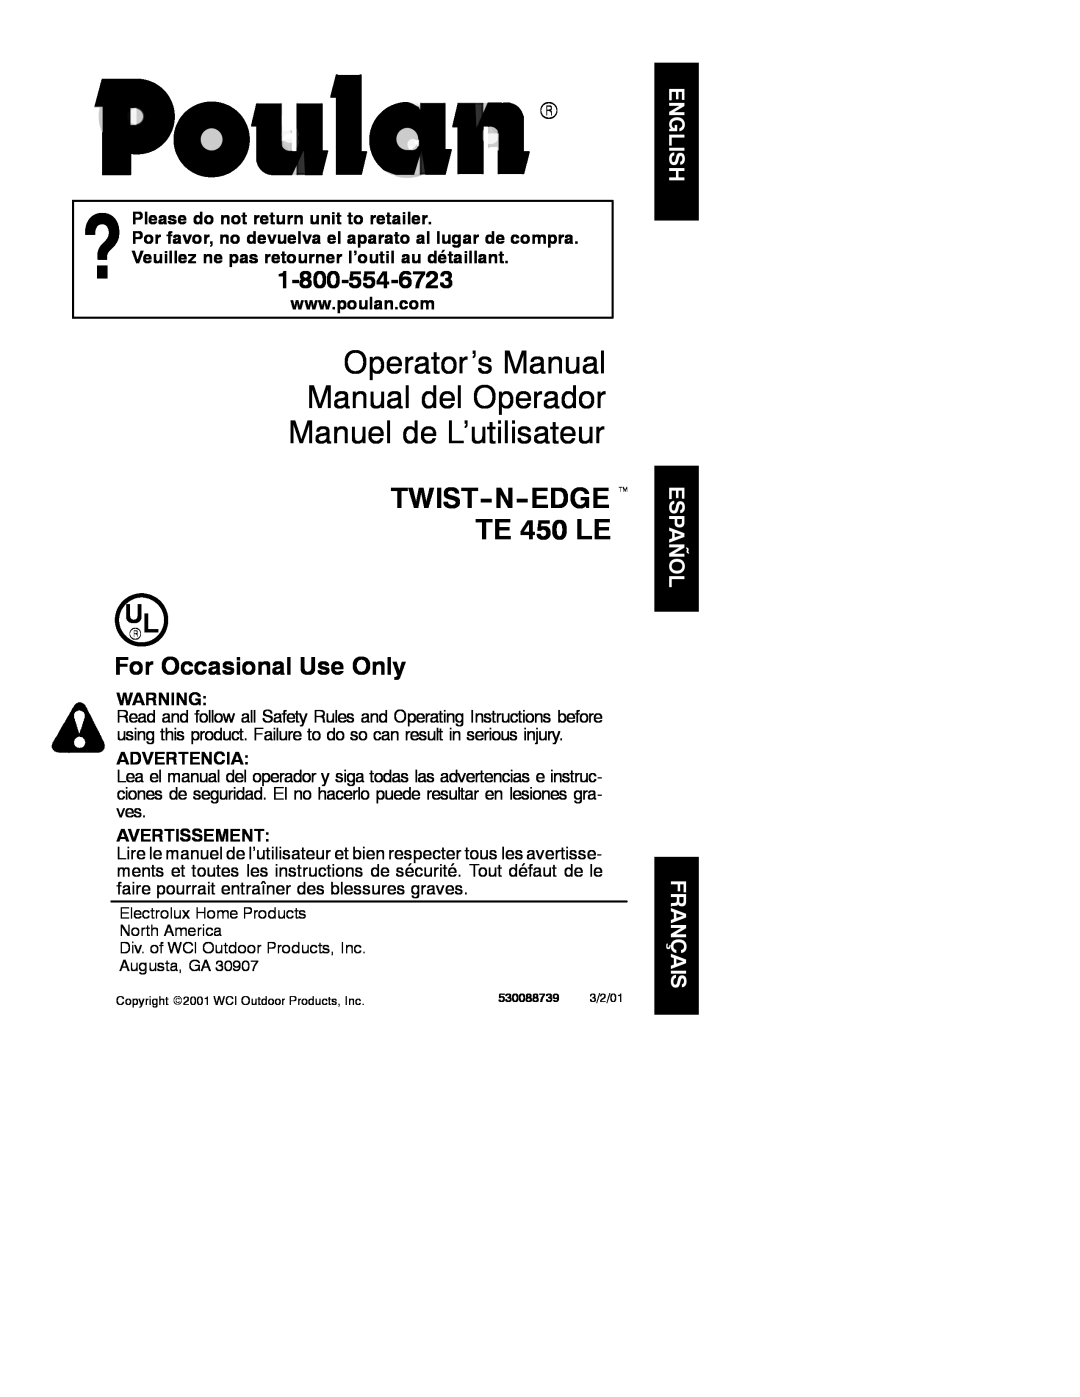 Poulan 530088739 manual Operator’s Manual Manual del Operador, Manuel de L’utilisateur, TWIST-N-EDGE t TE 450 LE 